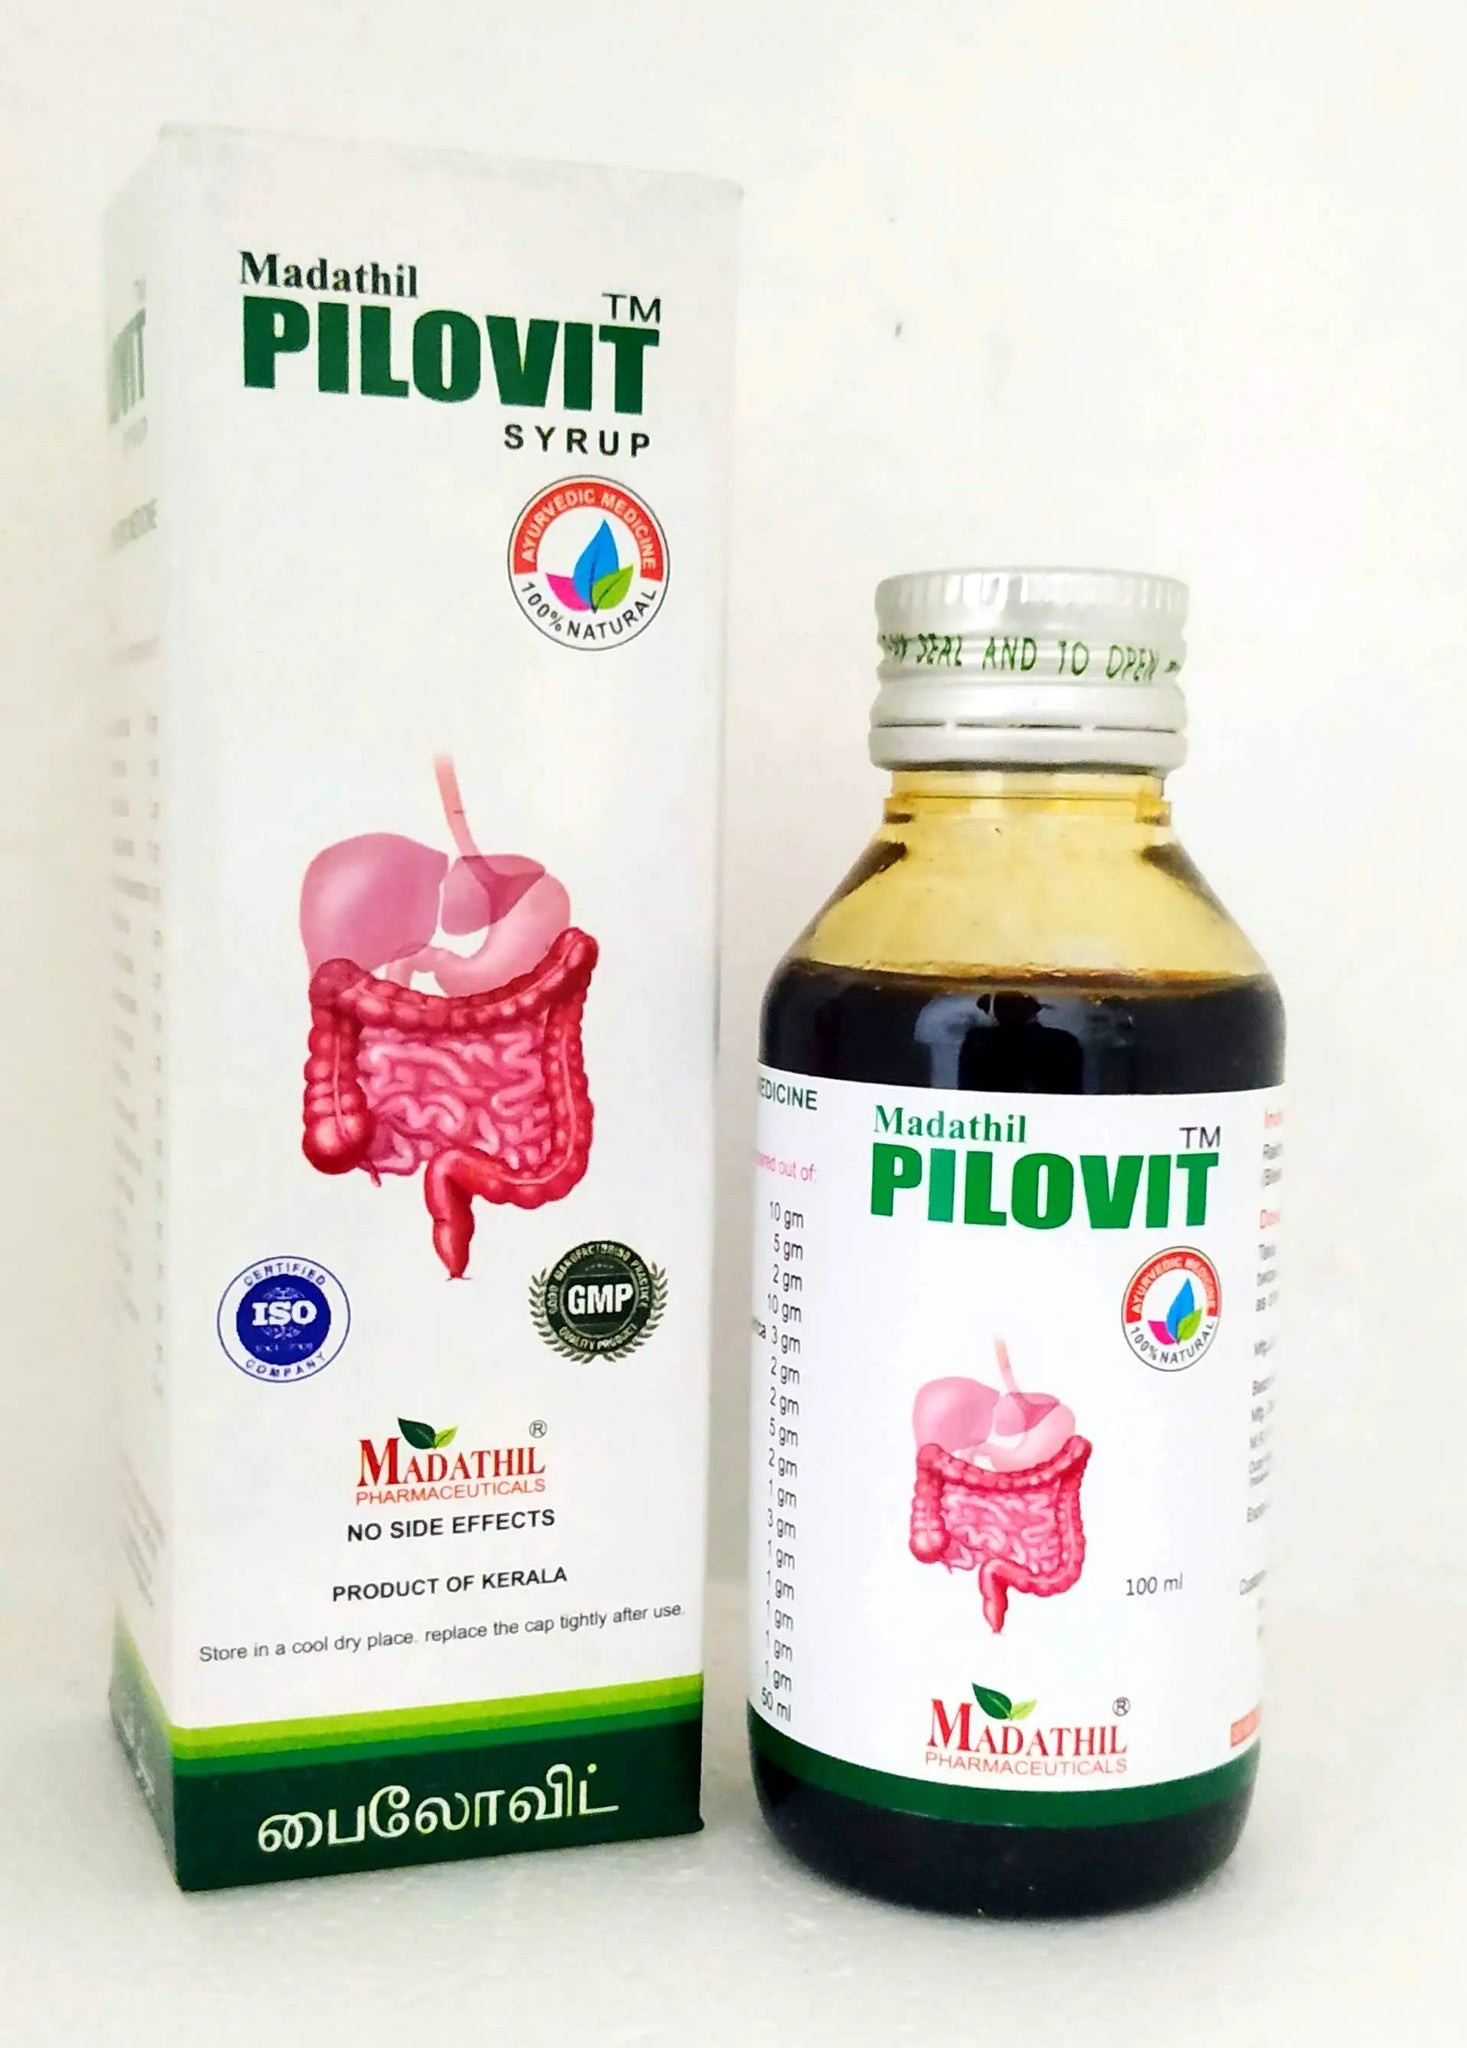 Pilovit Syrup 100ml Madathil